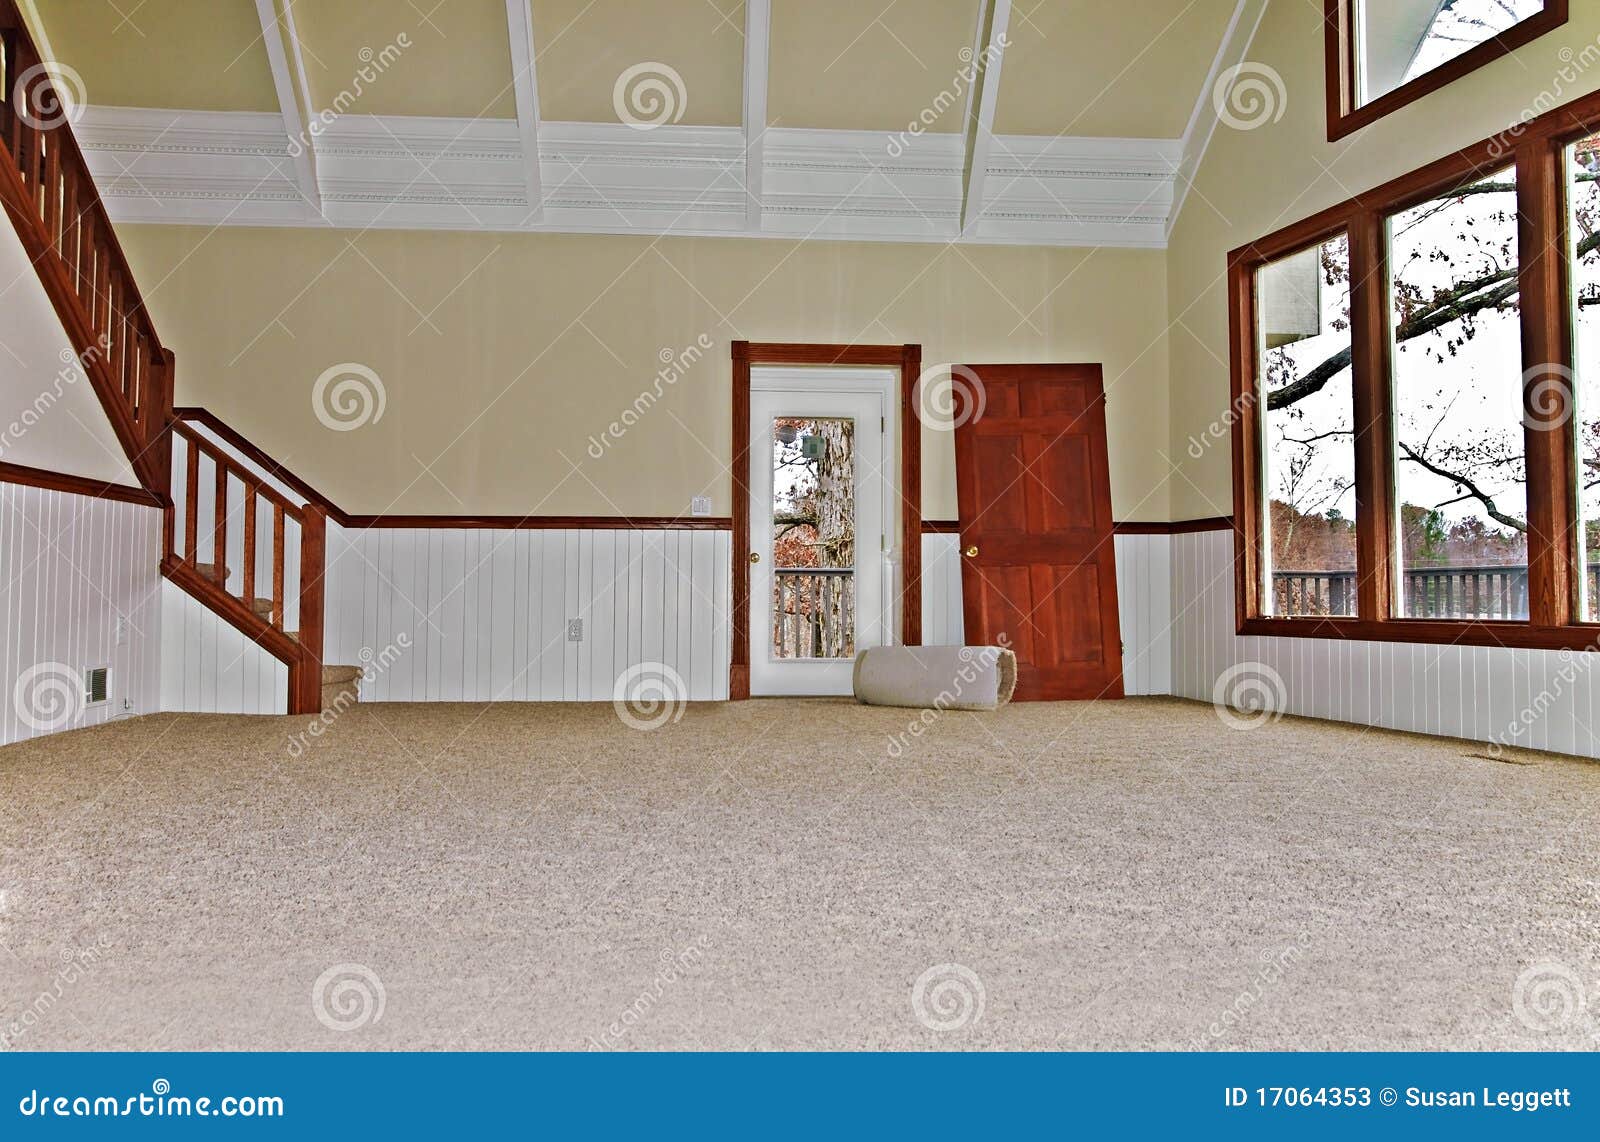 empty room with new carpet